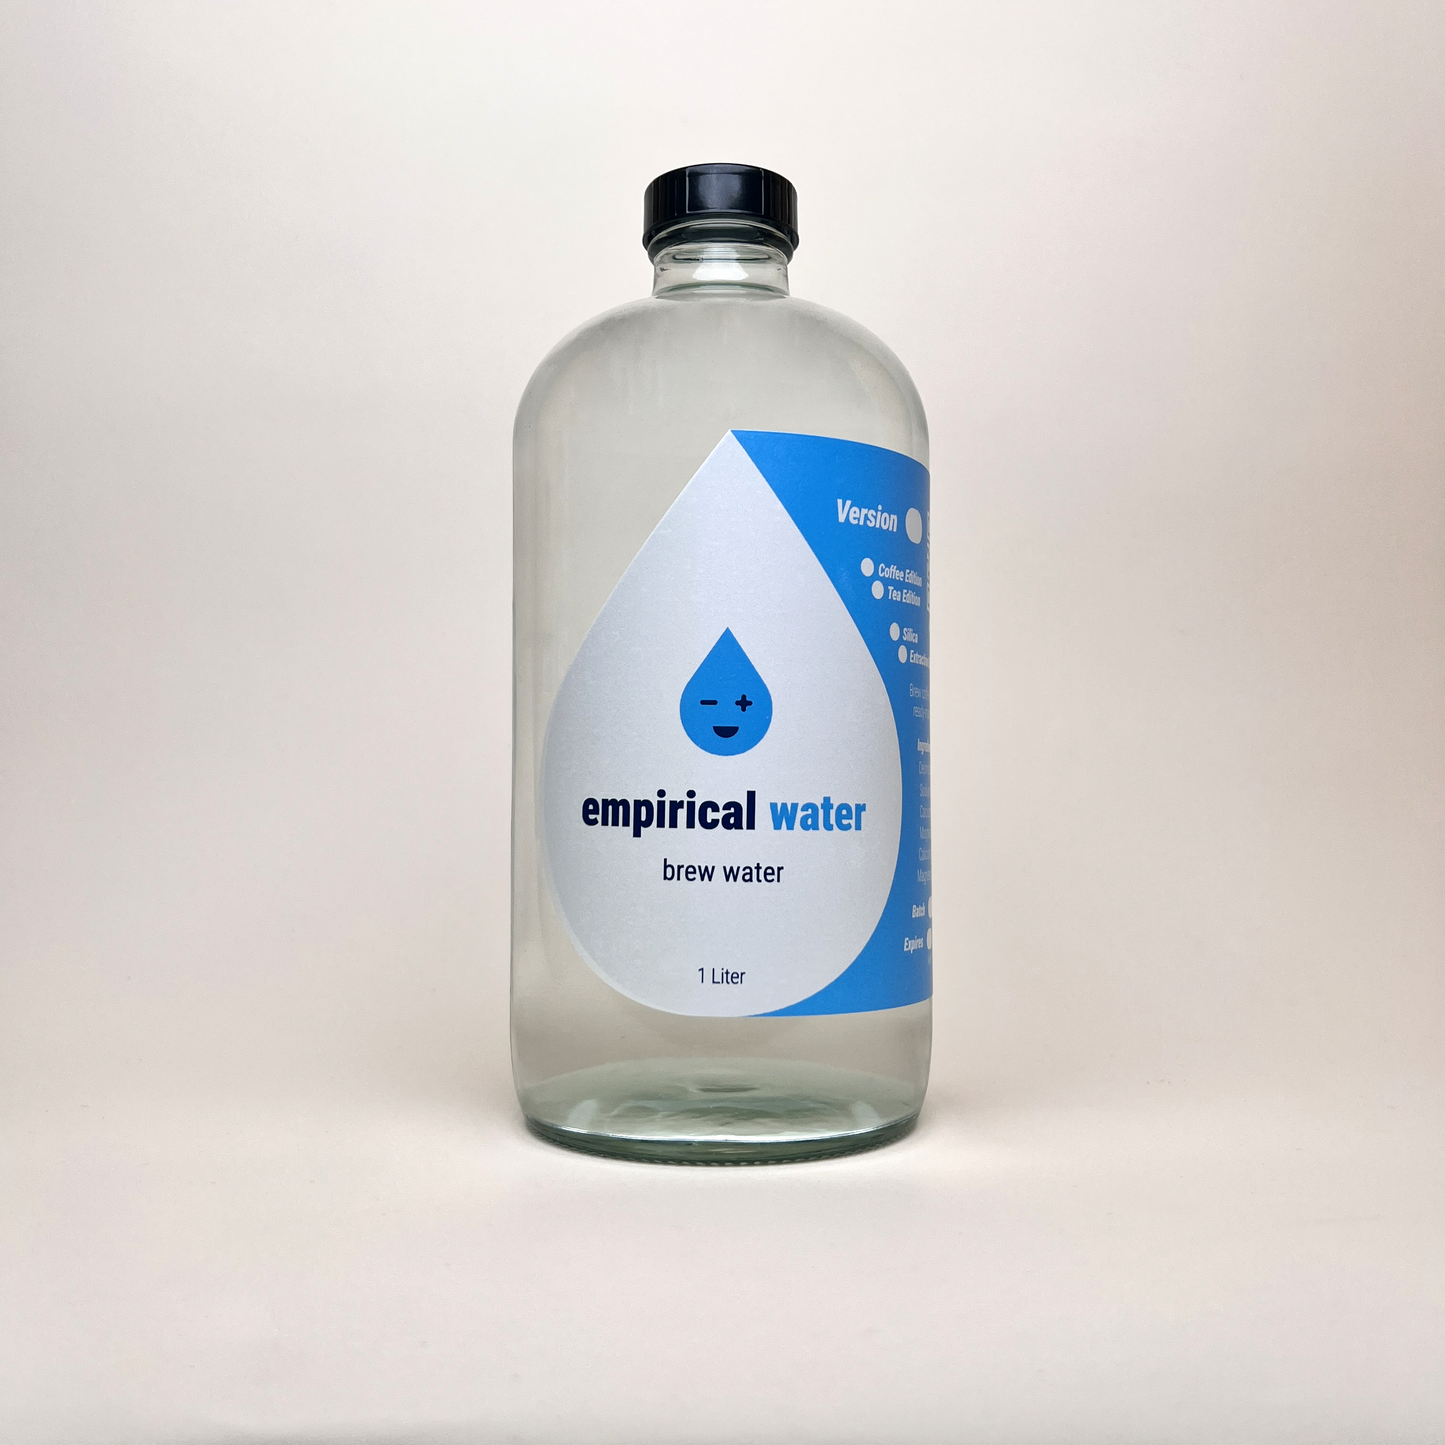 empirical water v1.5 — Free Sample